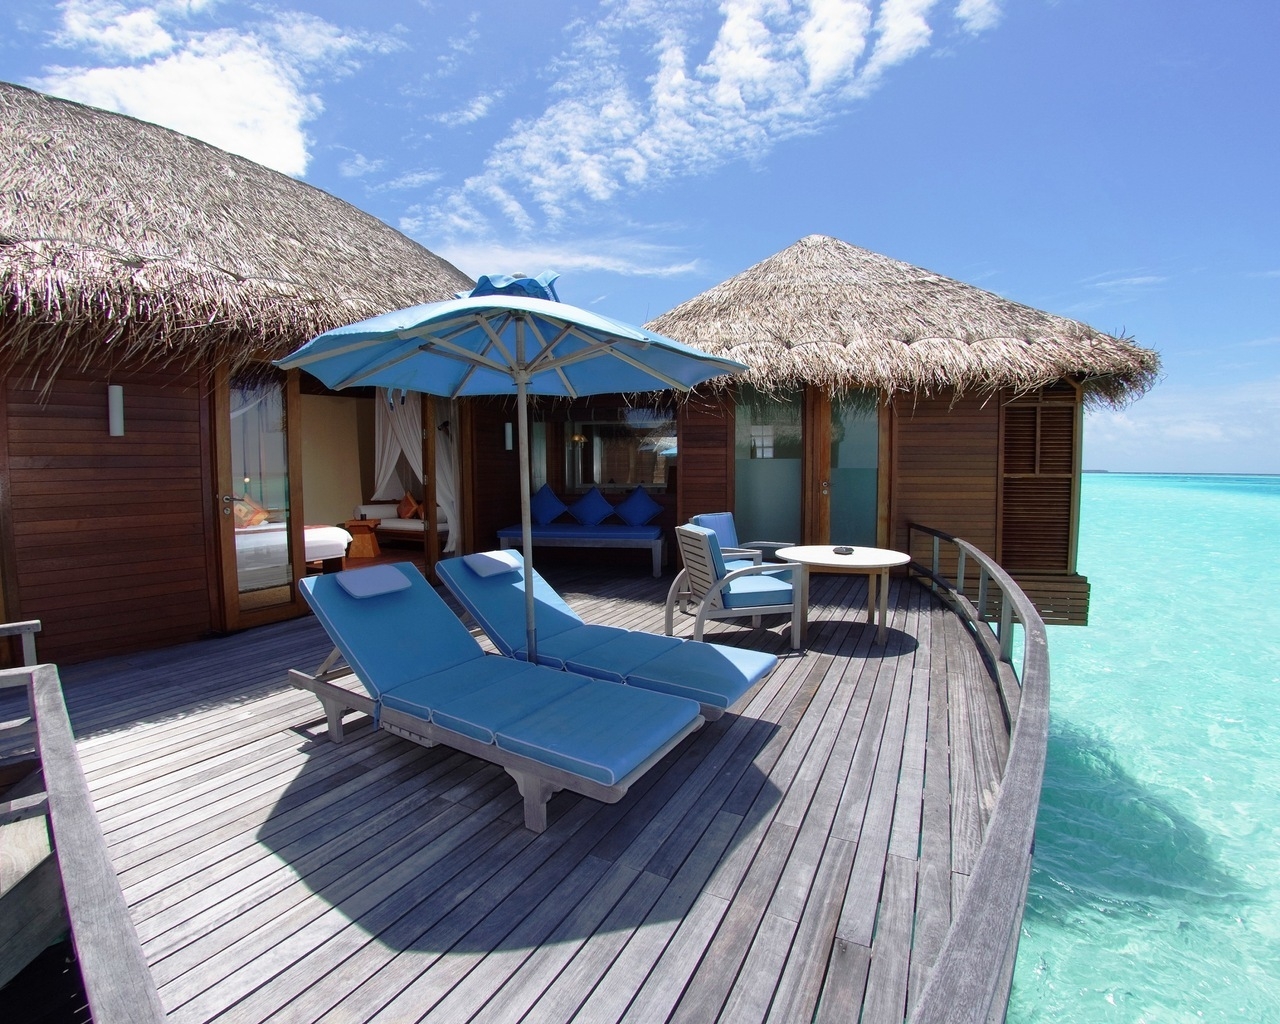 Maldives Resort for 1280 x 1024 resolution